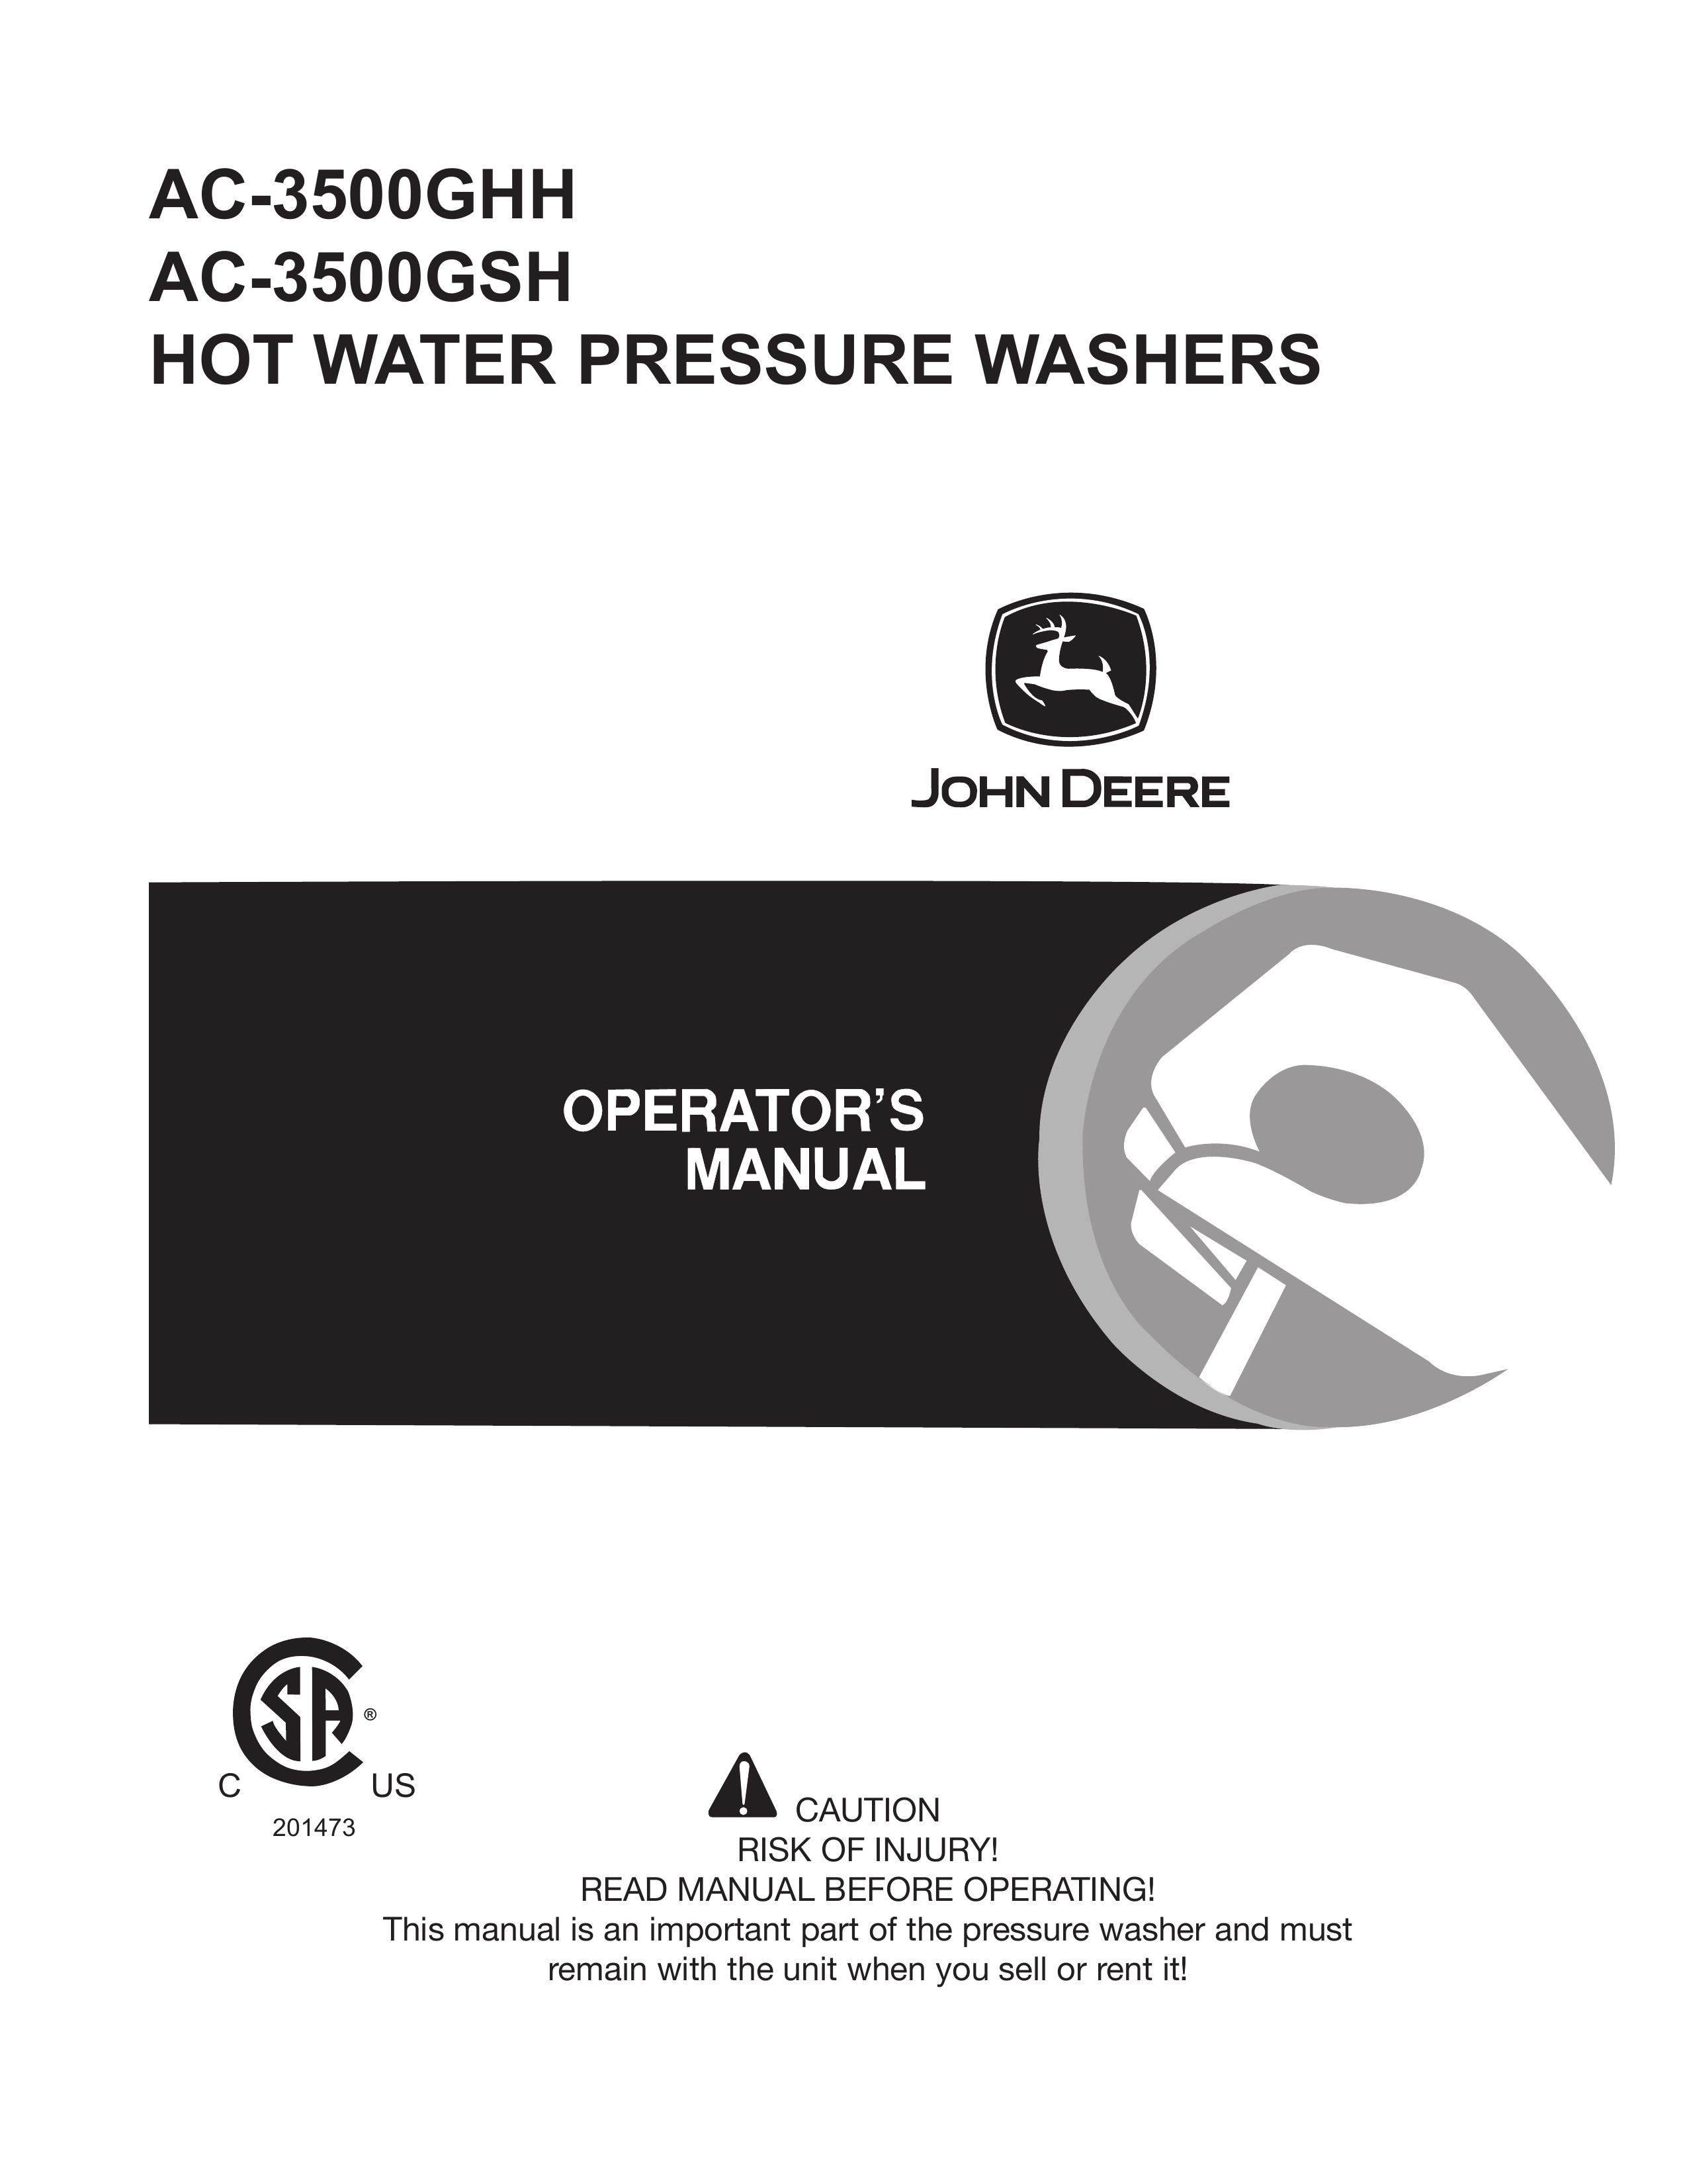 John Deere AC-3500GHH Pressure Washer User Manual